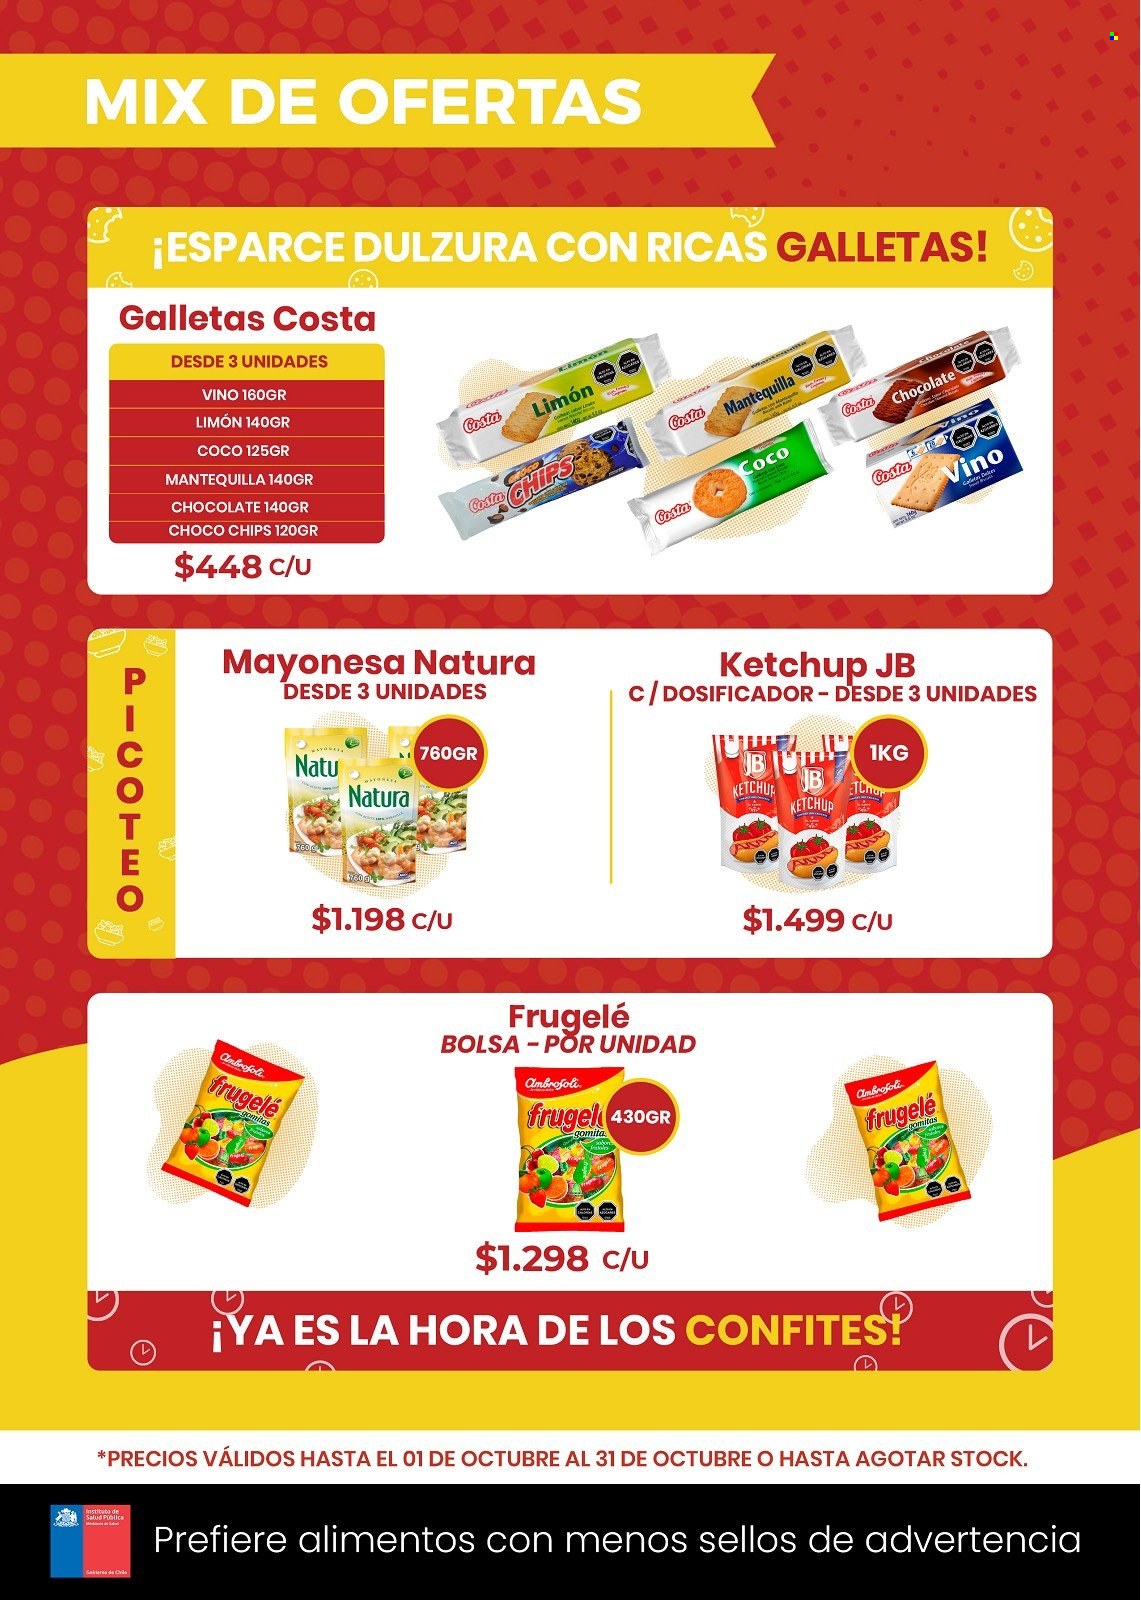 thumbnail - Catálogo Comercial Castro - 01.10.2021 - 31.10.2021 - Ventas - mayonesa, galletas, Choco Chips, chips, ketchup, vino, bolso. Página 11.